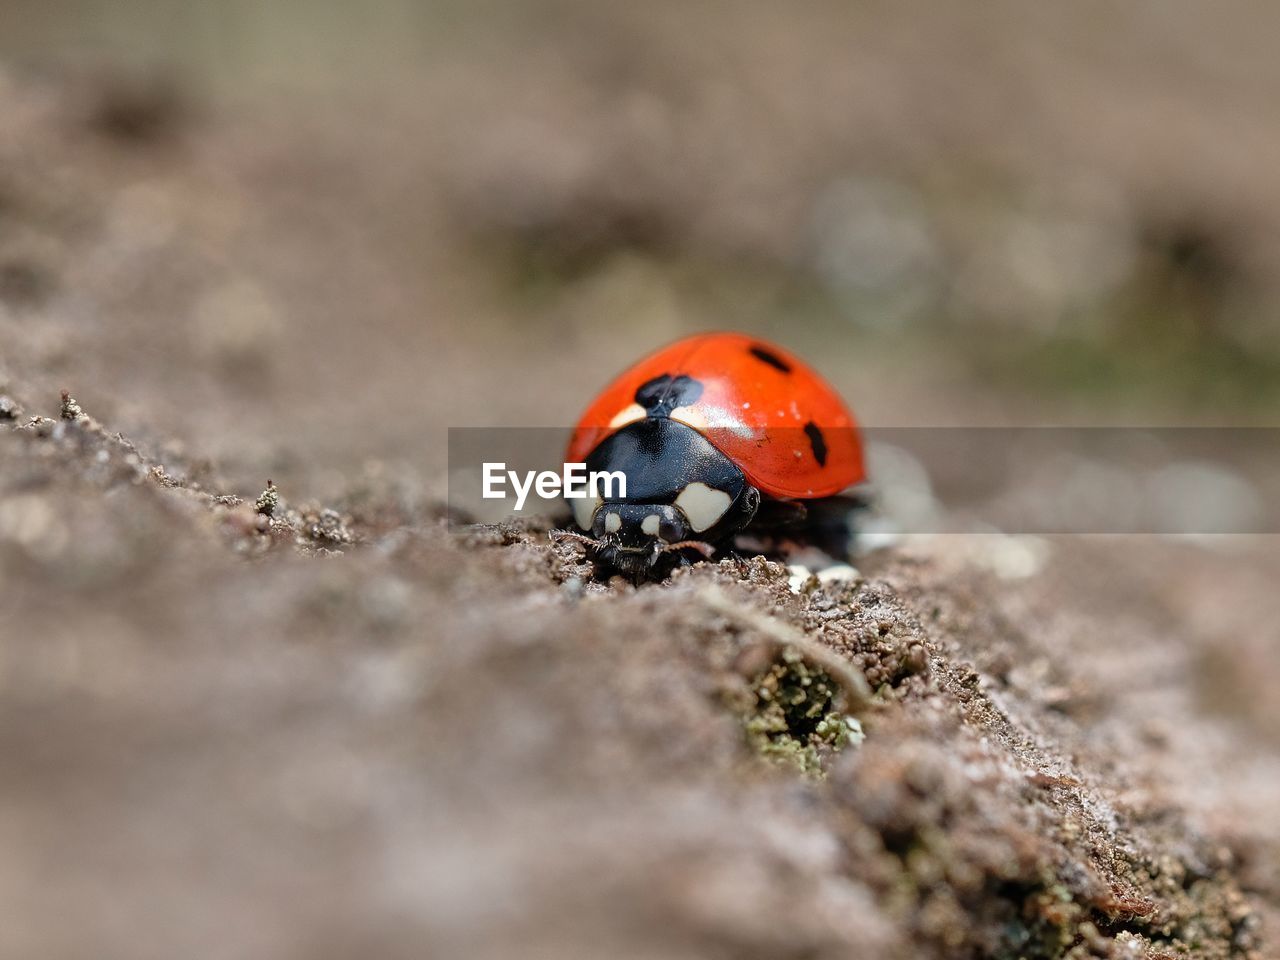 Close-up of ladybug on tree.